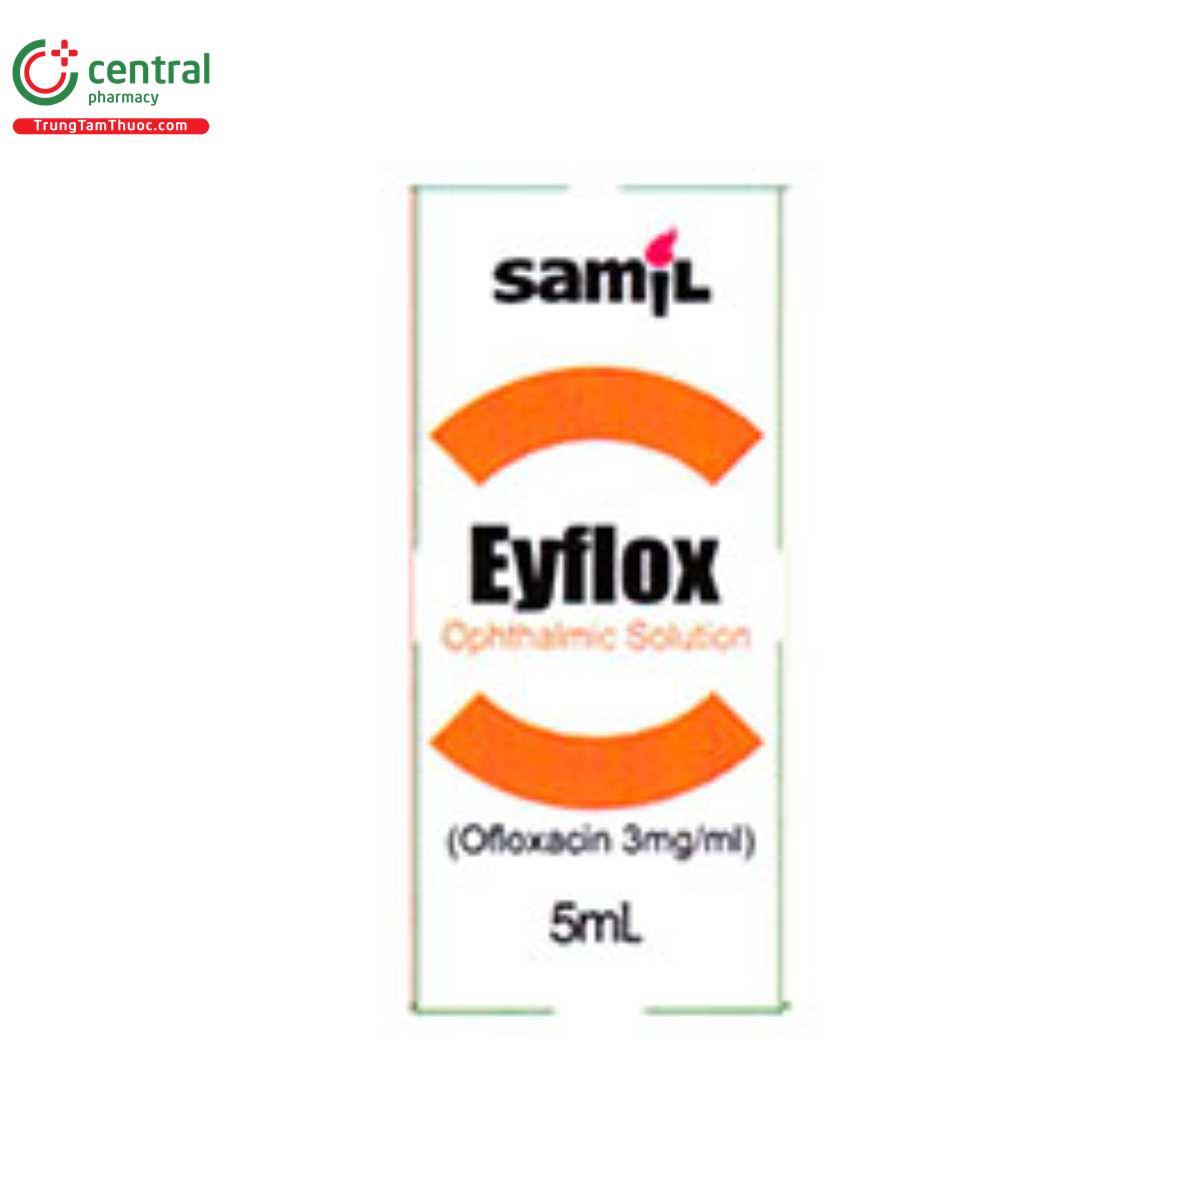 eyflox ophthalmic solution 5ml 2 C1143